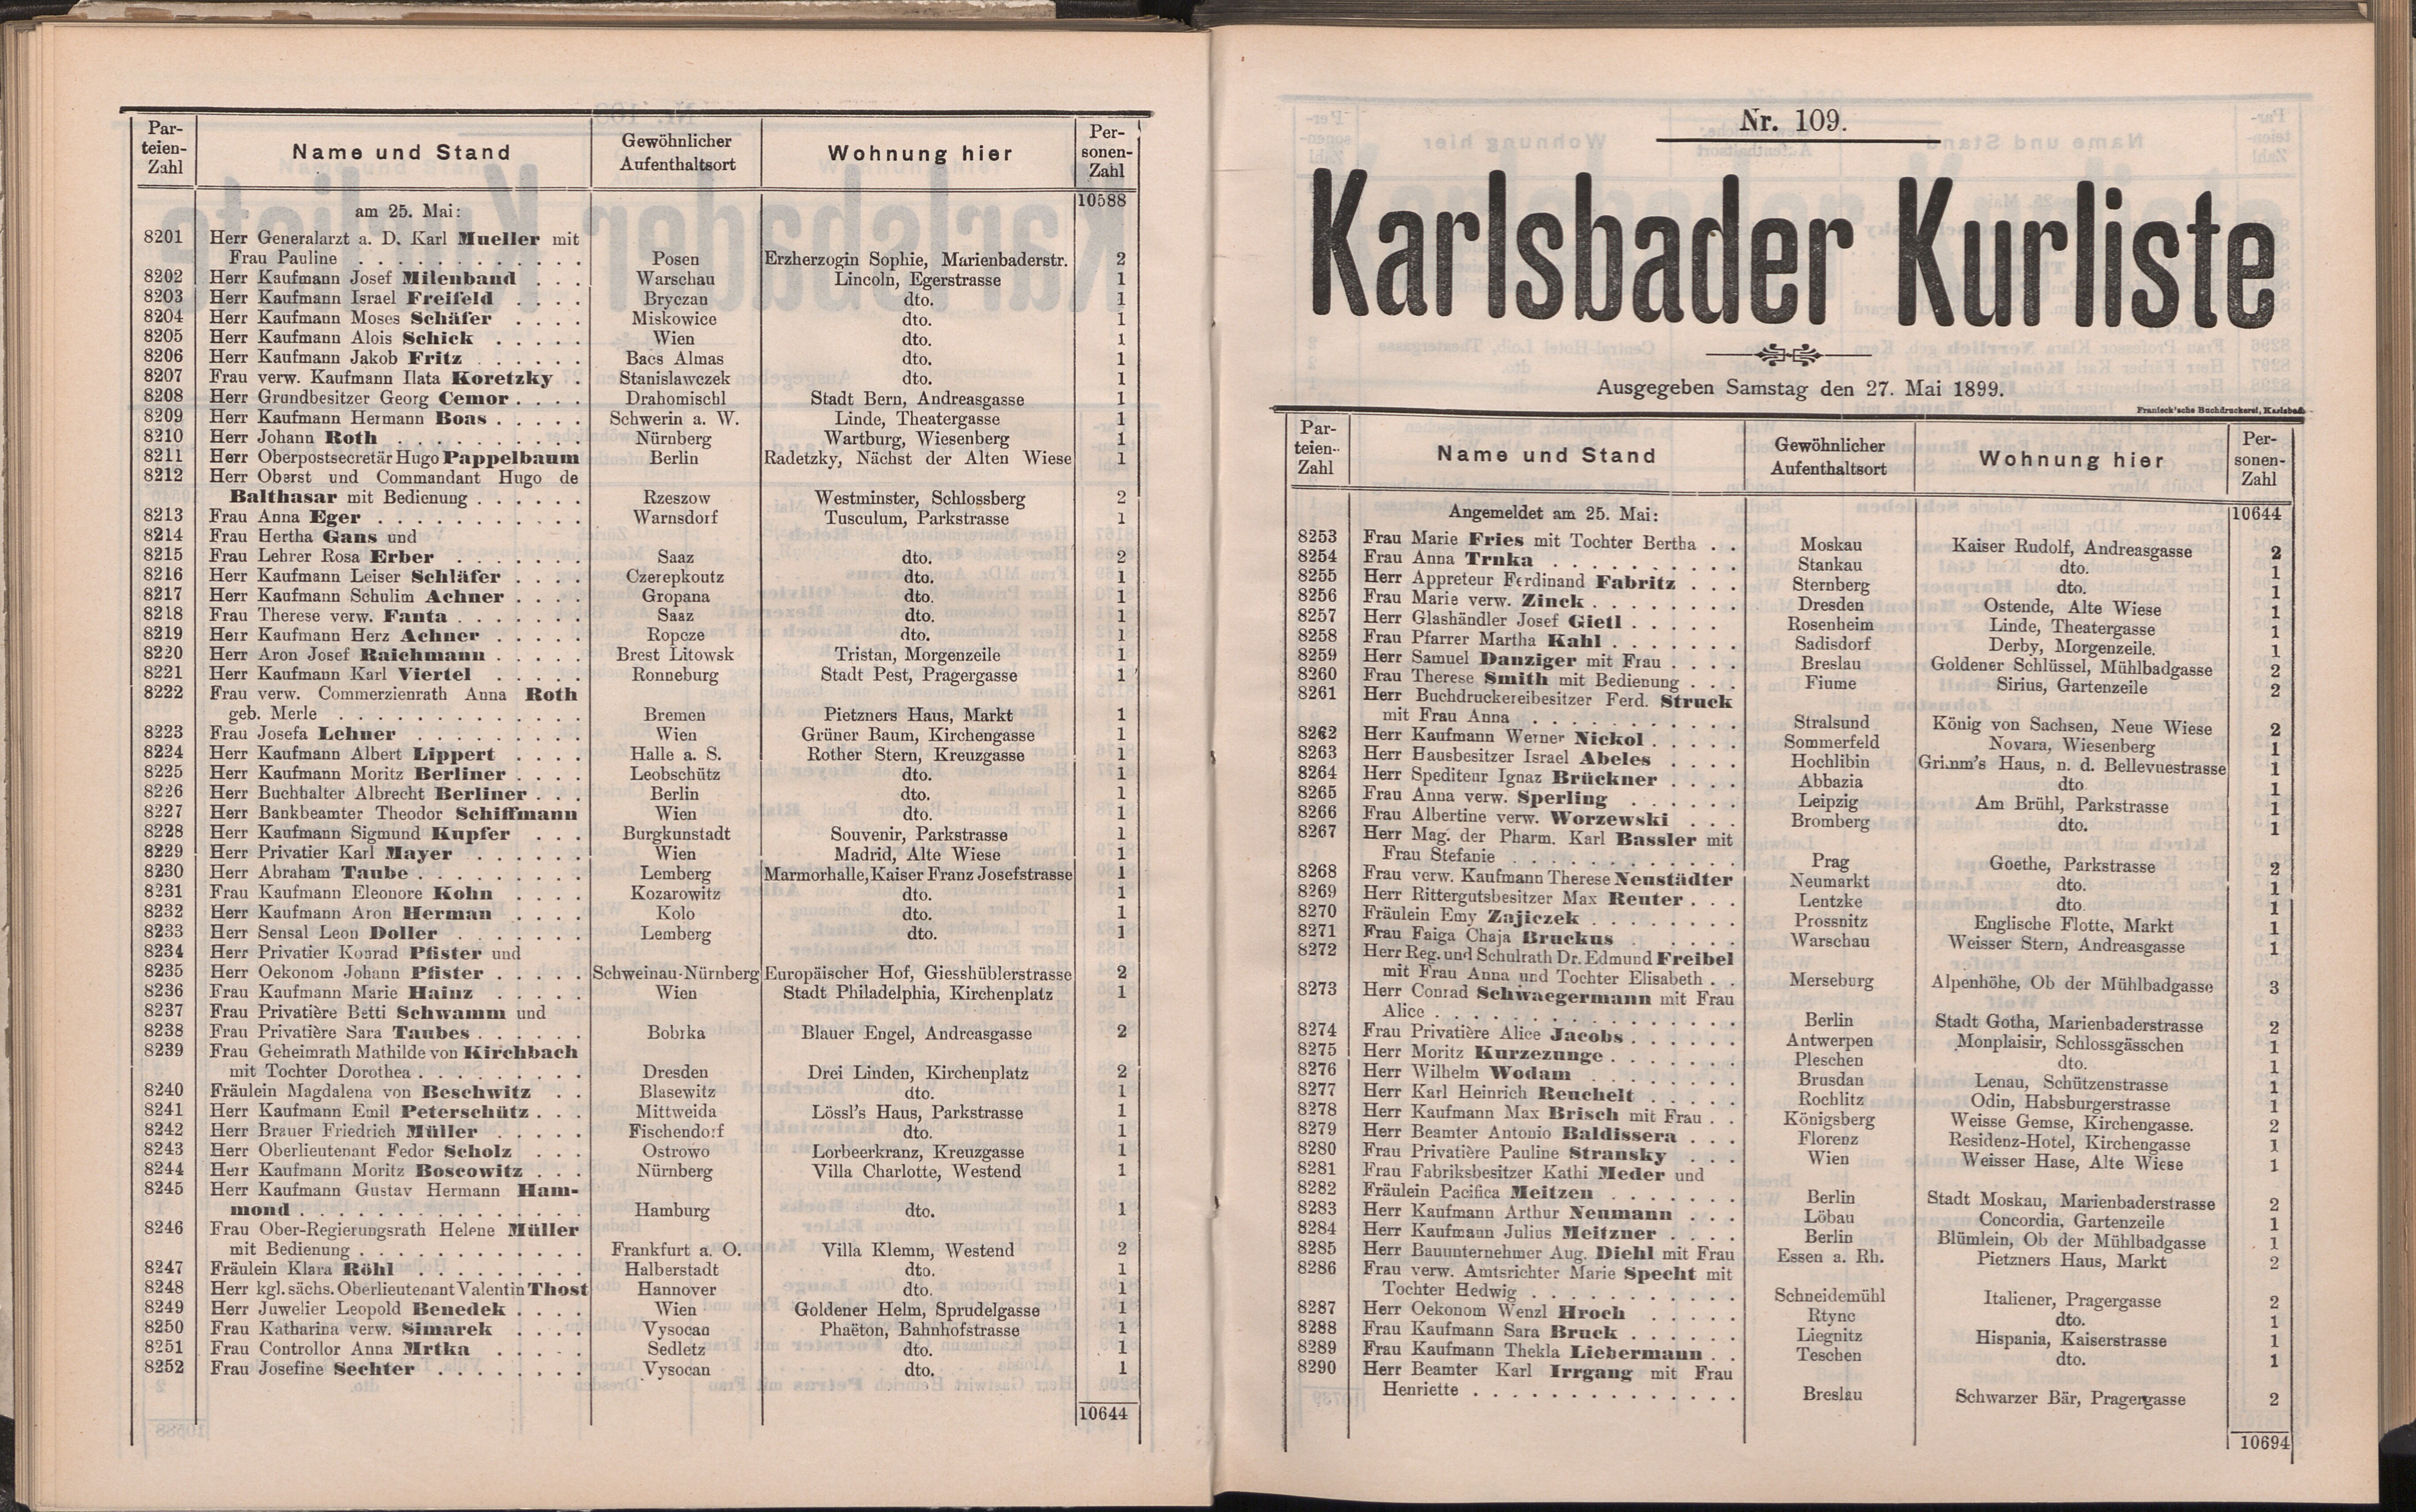 127. soap-kv_knihovna_karlsbader-kurliste-1899_1280